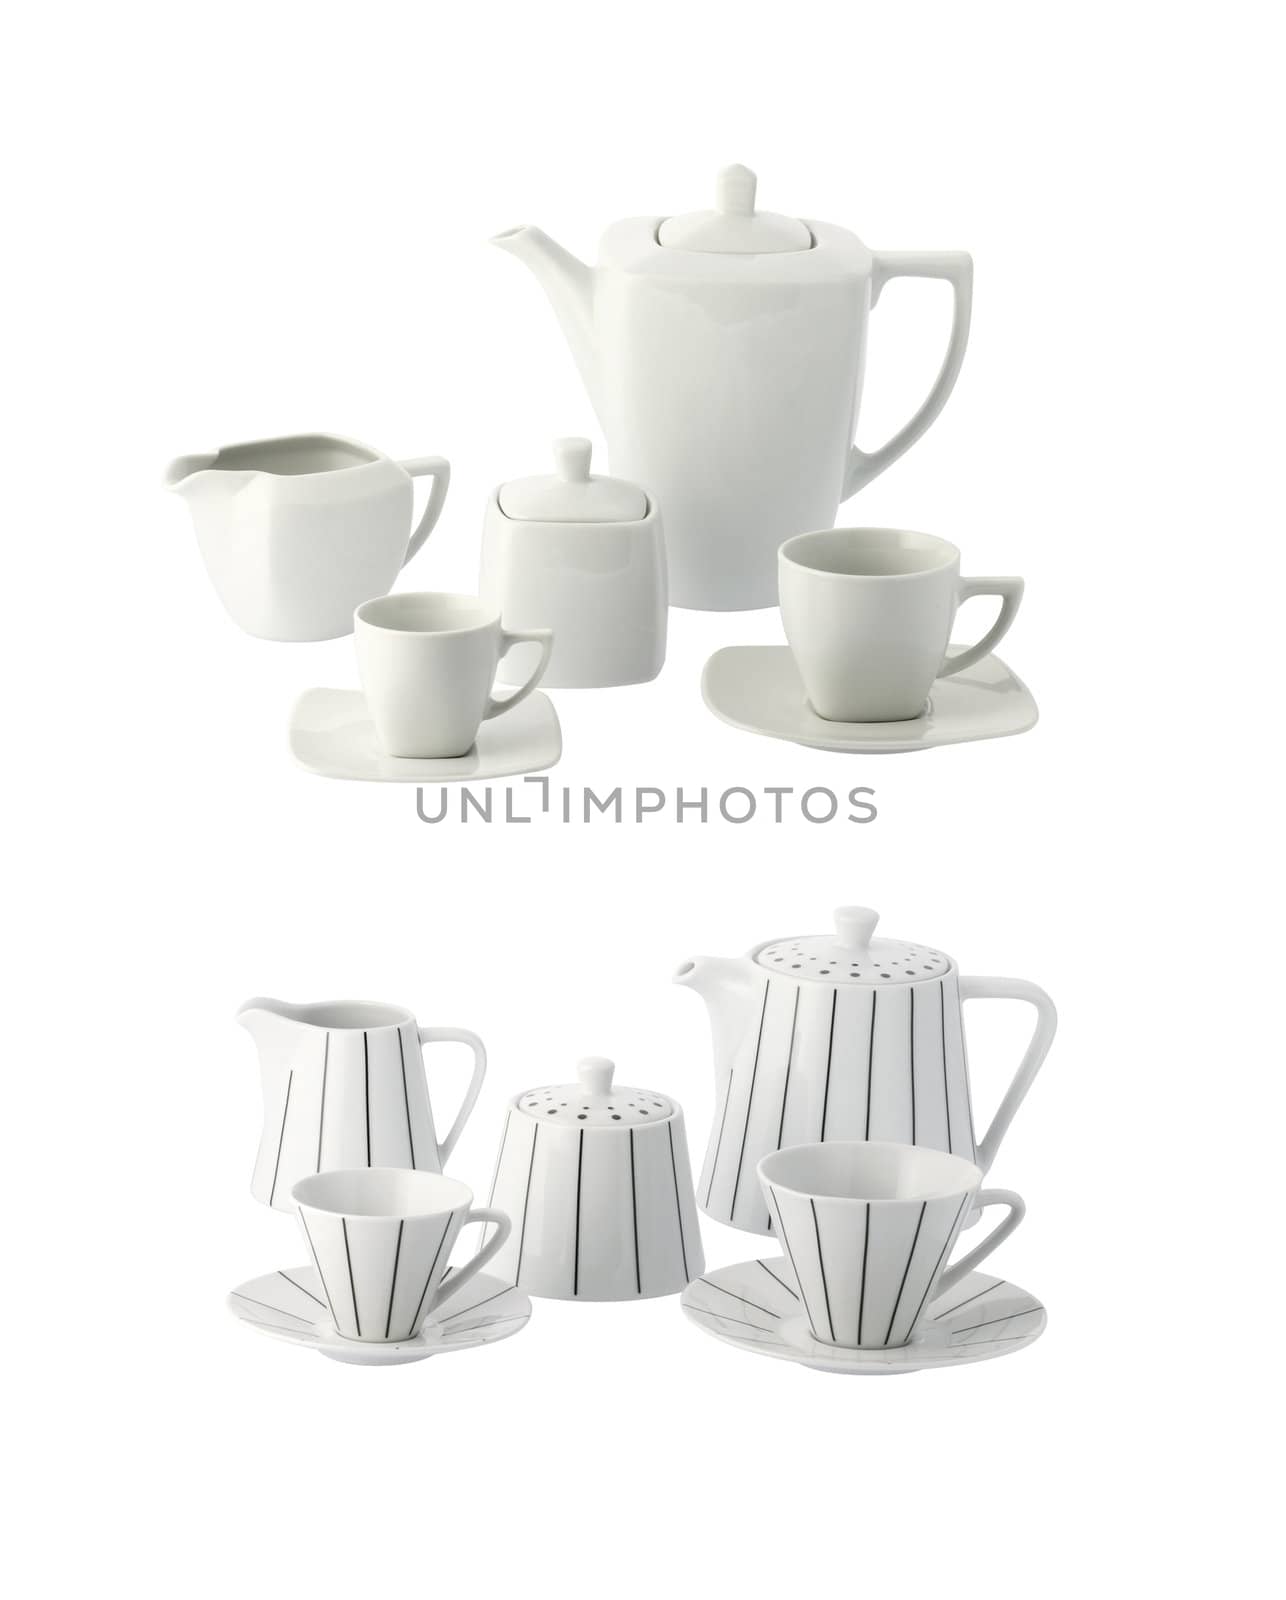 white porcelain tea set, isolated on white background by stokkete